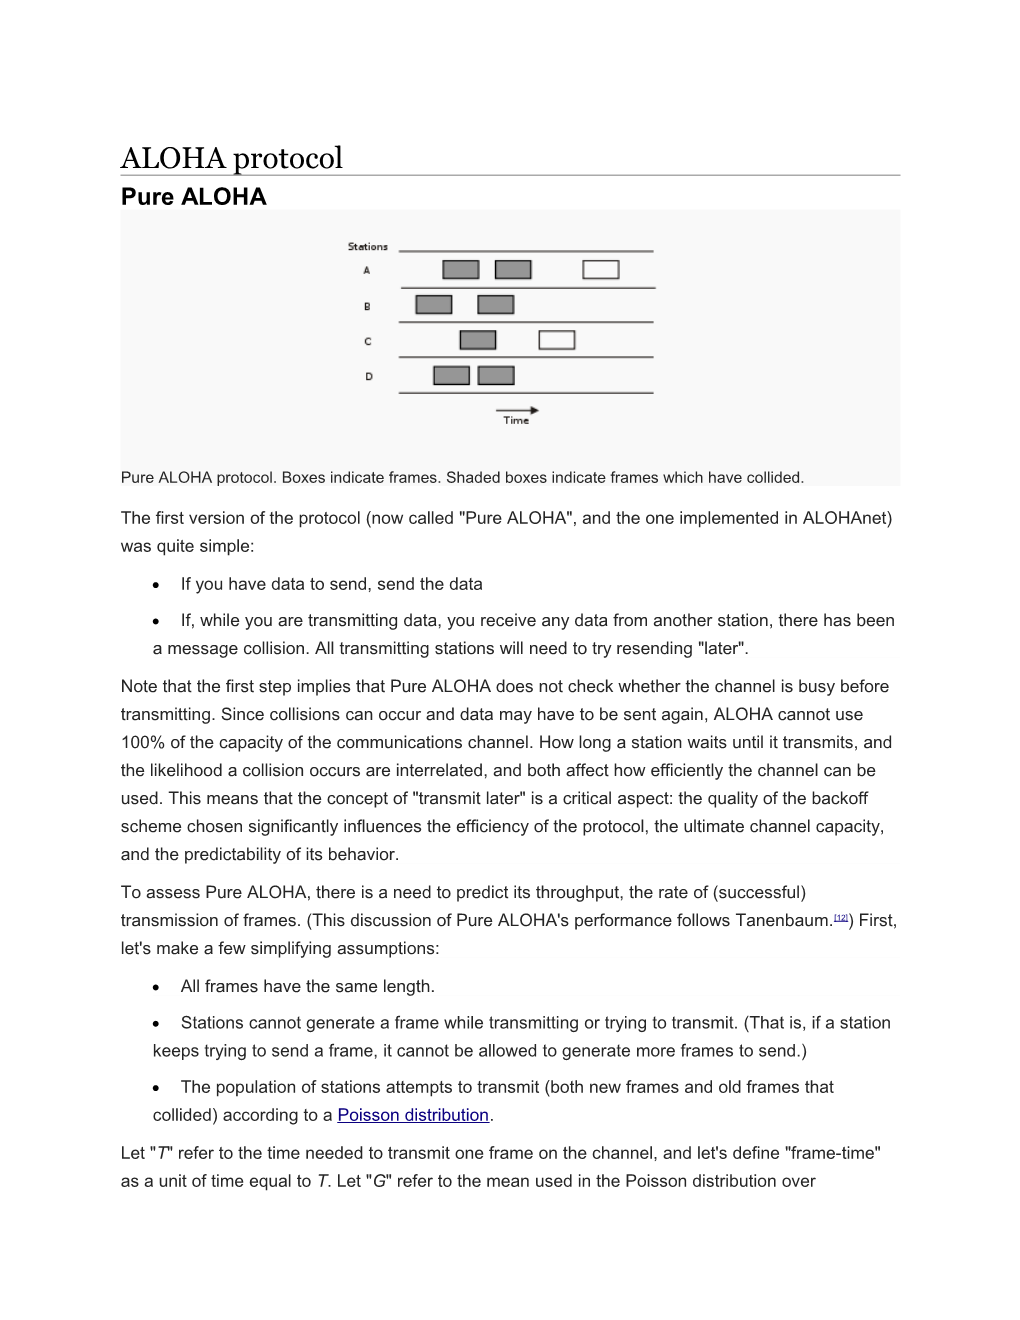 Pure ALOHA Protocol. Boxes Indicate Frames. Shaded Boxes Indicate Frames Which Have Collided